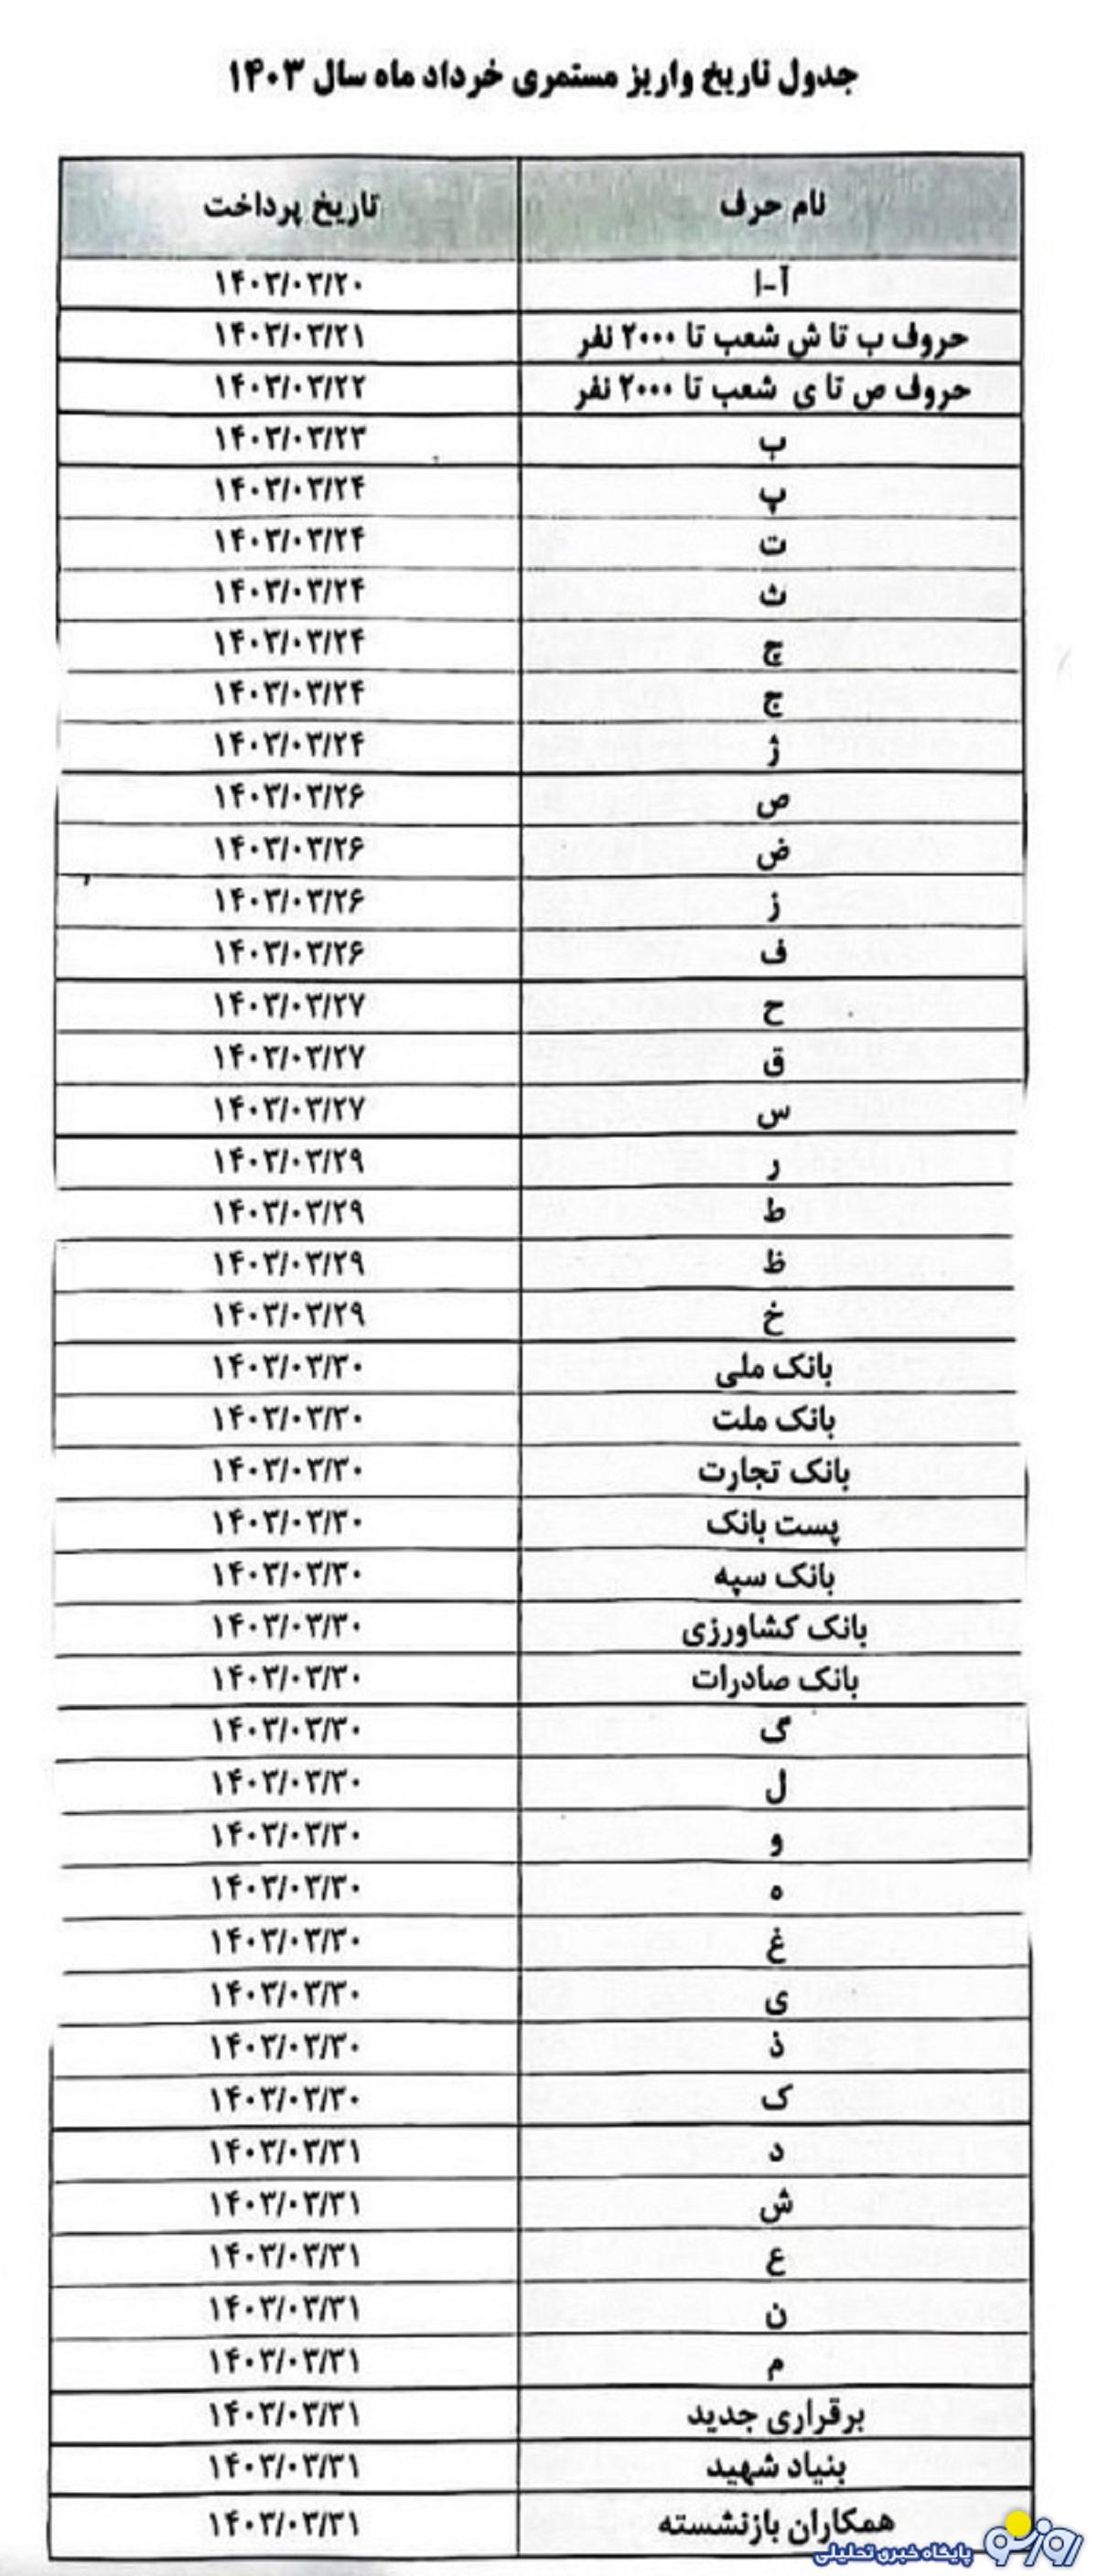 جدول زمانبندی پرداخت حقوق بازنشستگان بر اساس حروف الفبا